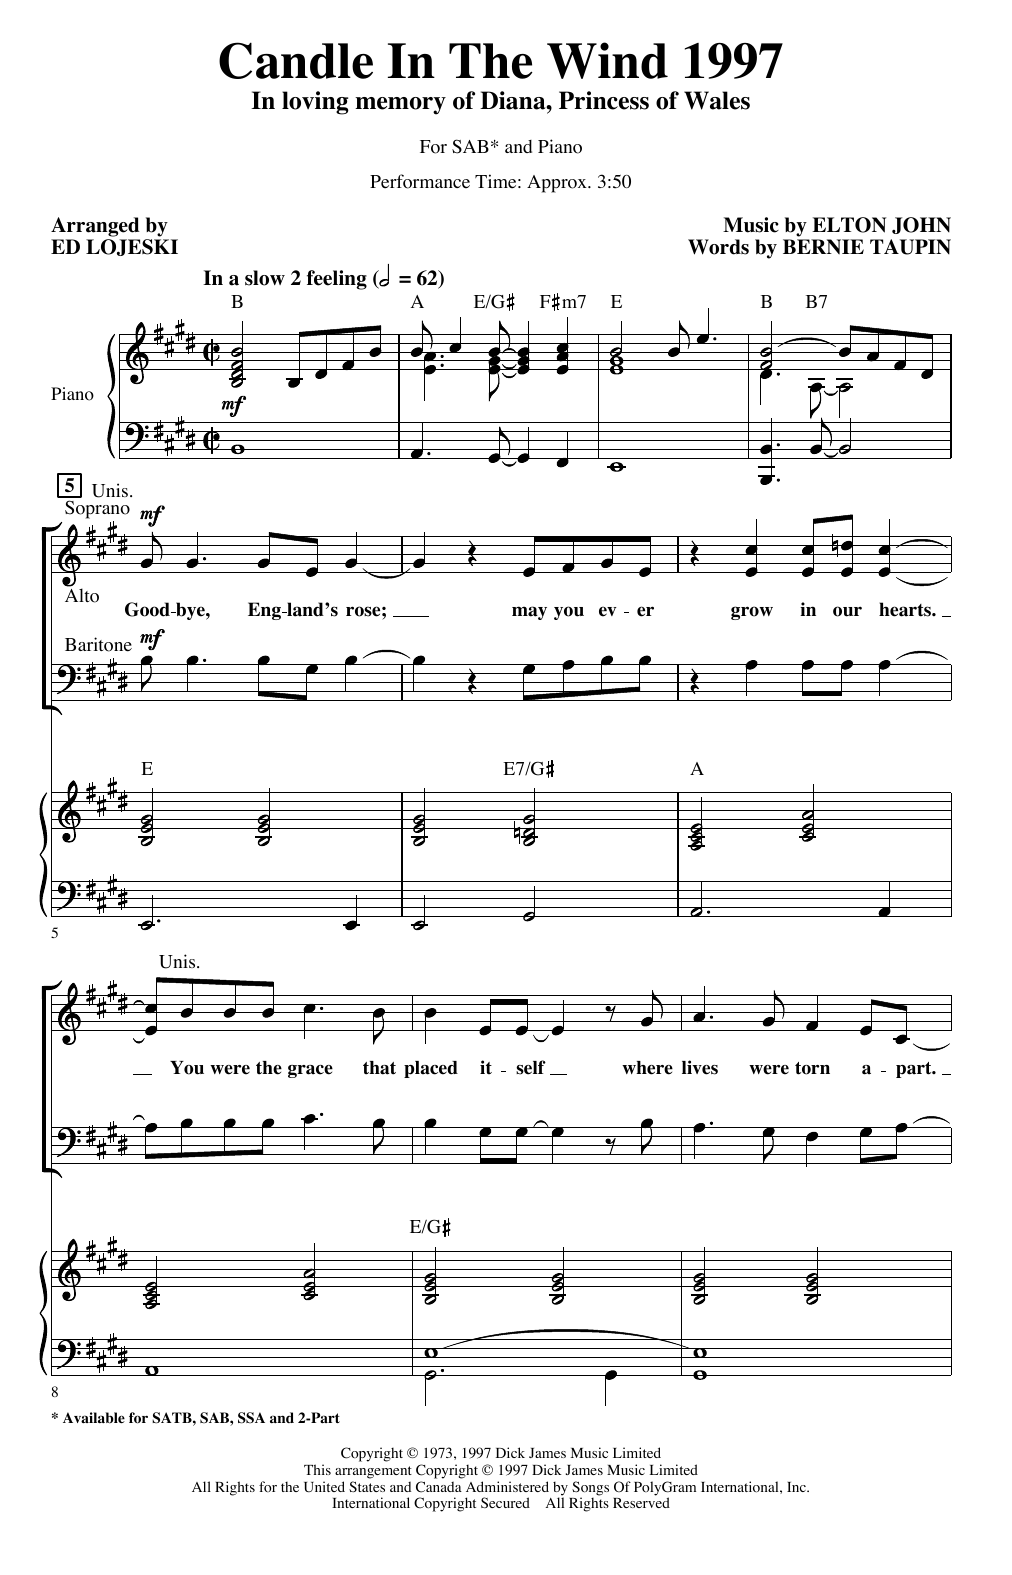 Elton John Candle In The Wind (arr. Ed Lojeski) Sheet Music Notes & Chords for SATB Choir - Download or Print PDF